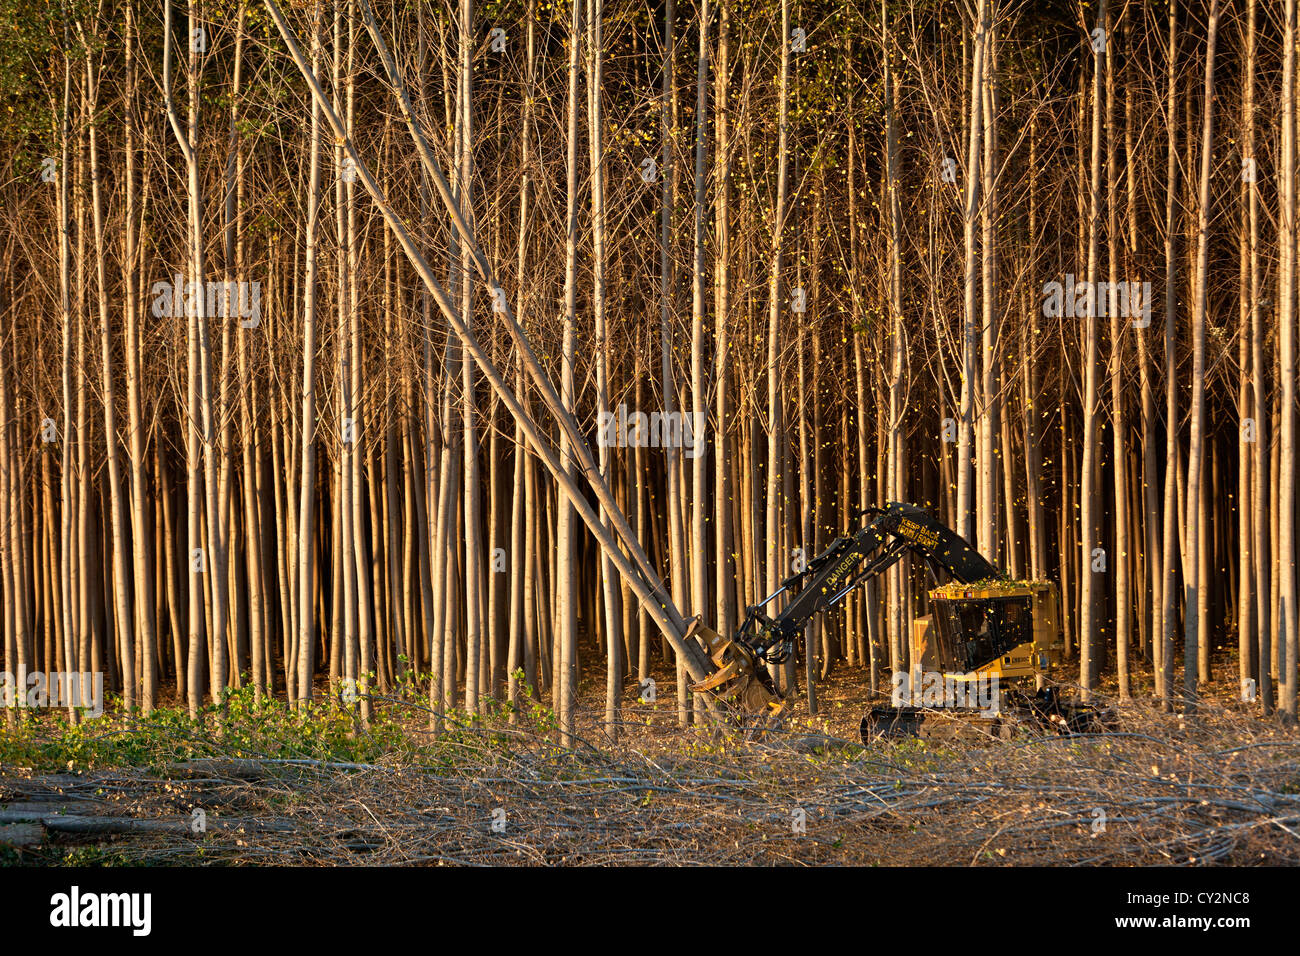 Tigercat Feller Buncher harvesting Hybrid Poplar trees. Stock Photo